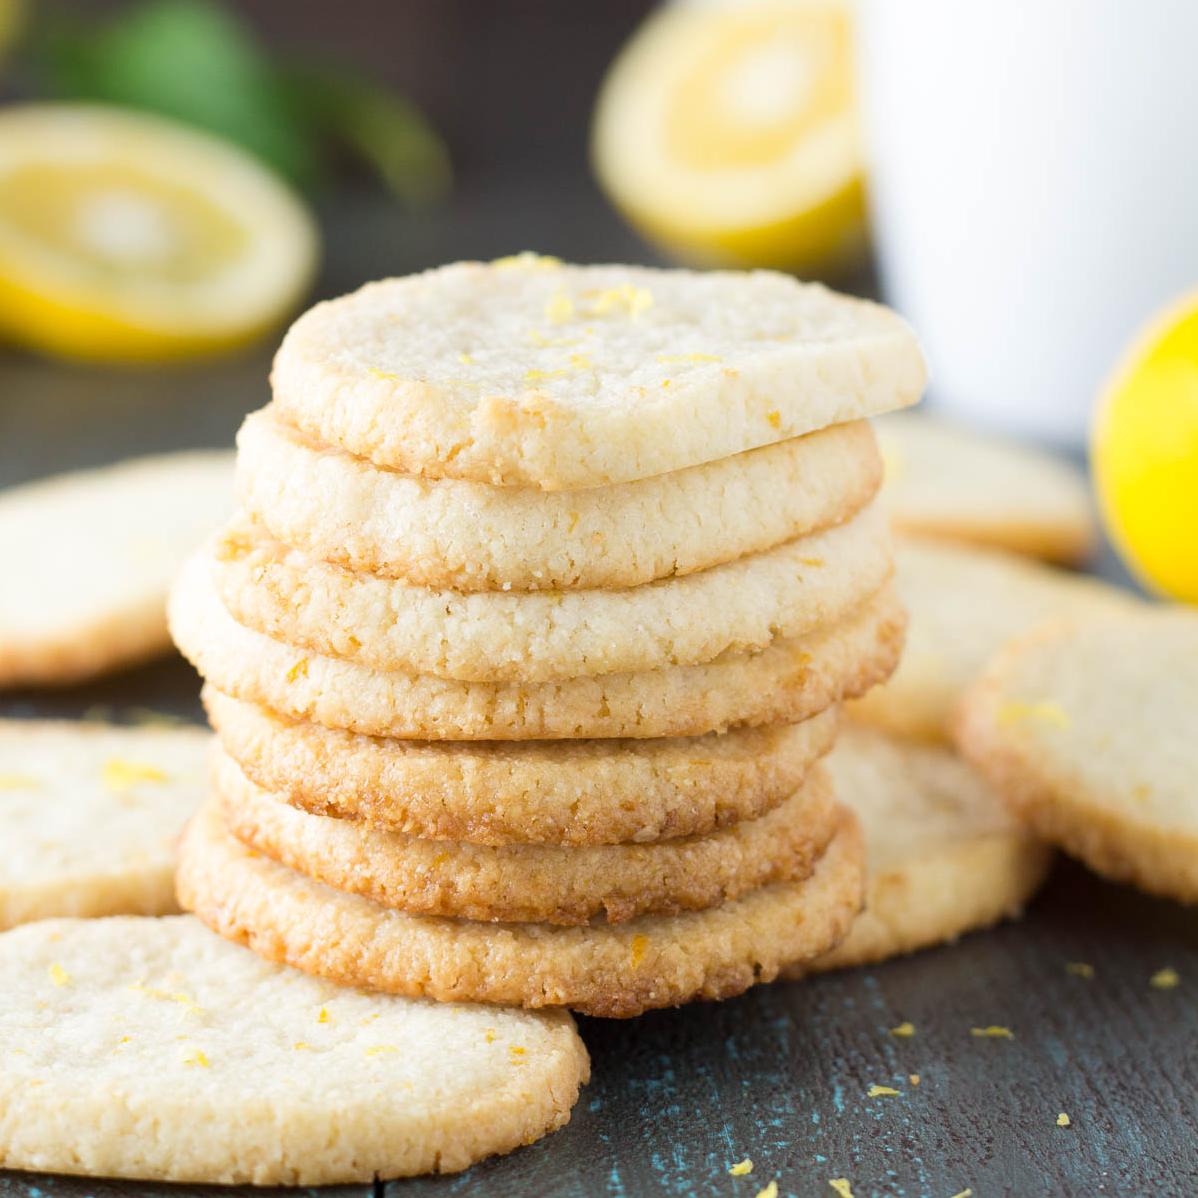  Need a gluten-free treat? Try these lemon shortbread!